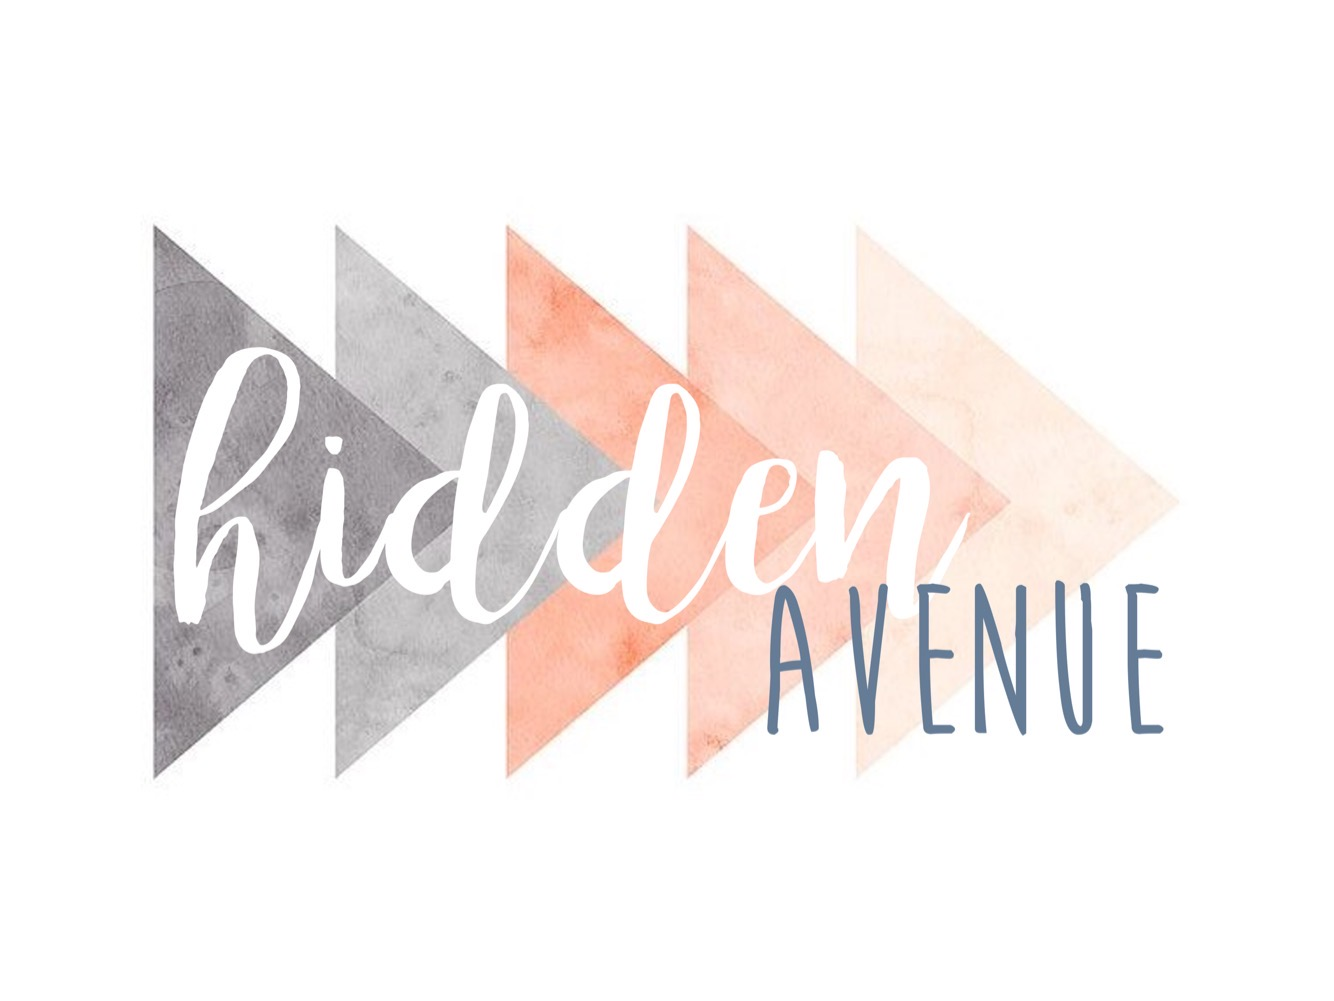 Hidden Avenue